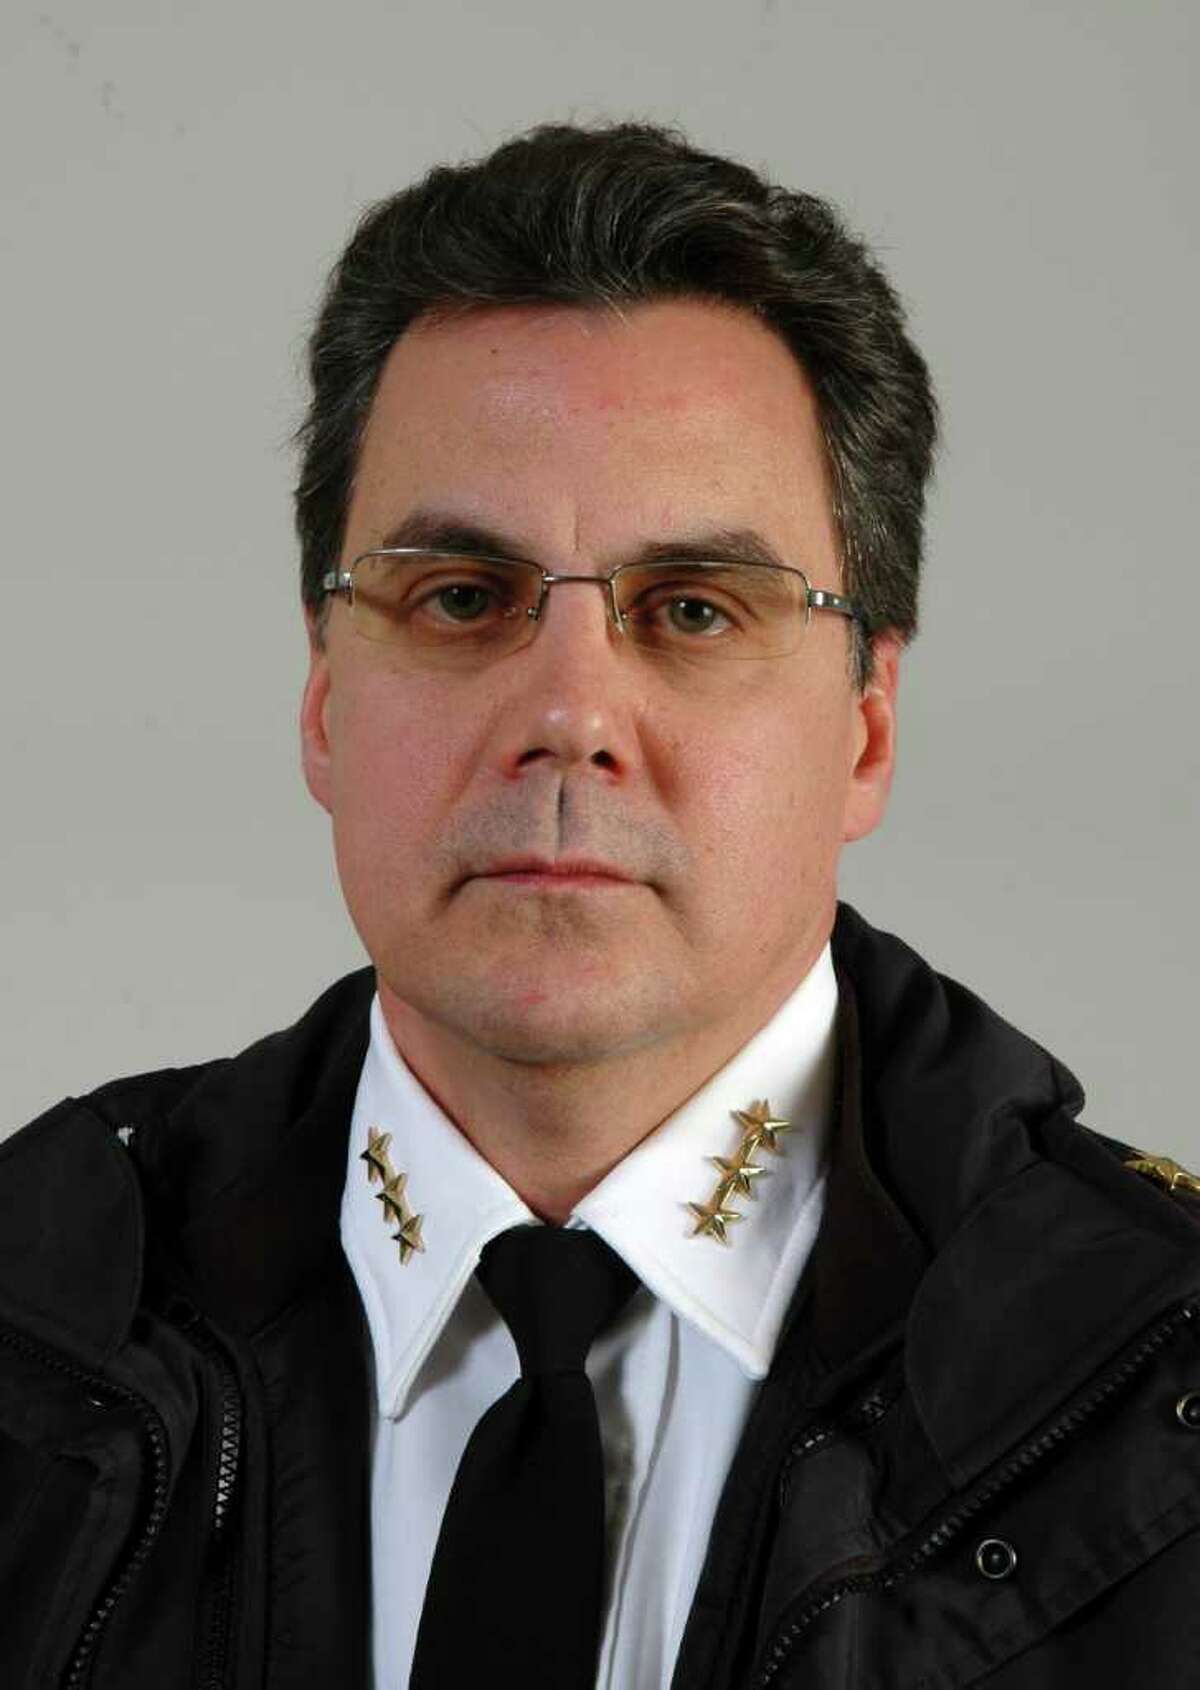 Bridgeport Police Chief Joseph L. Gaudett, Jr.